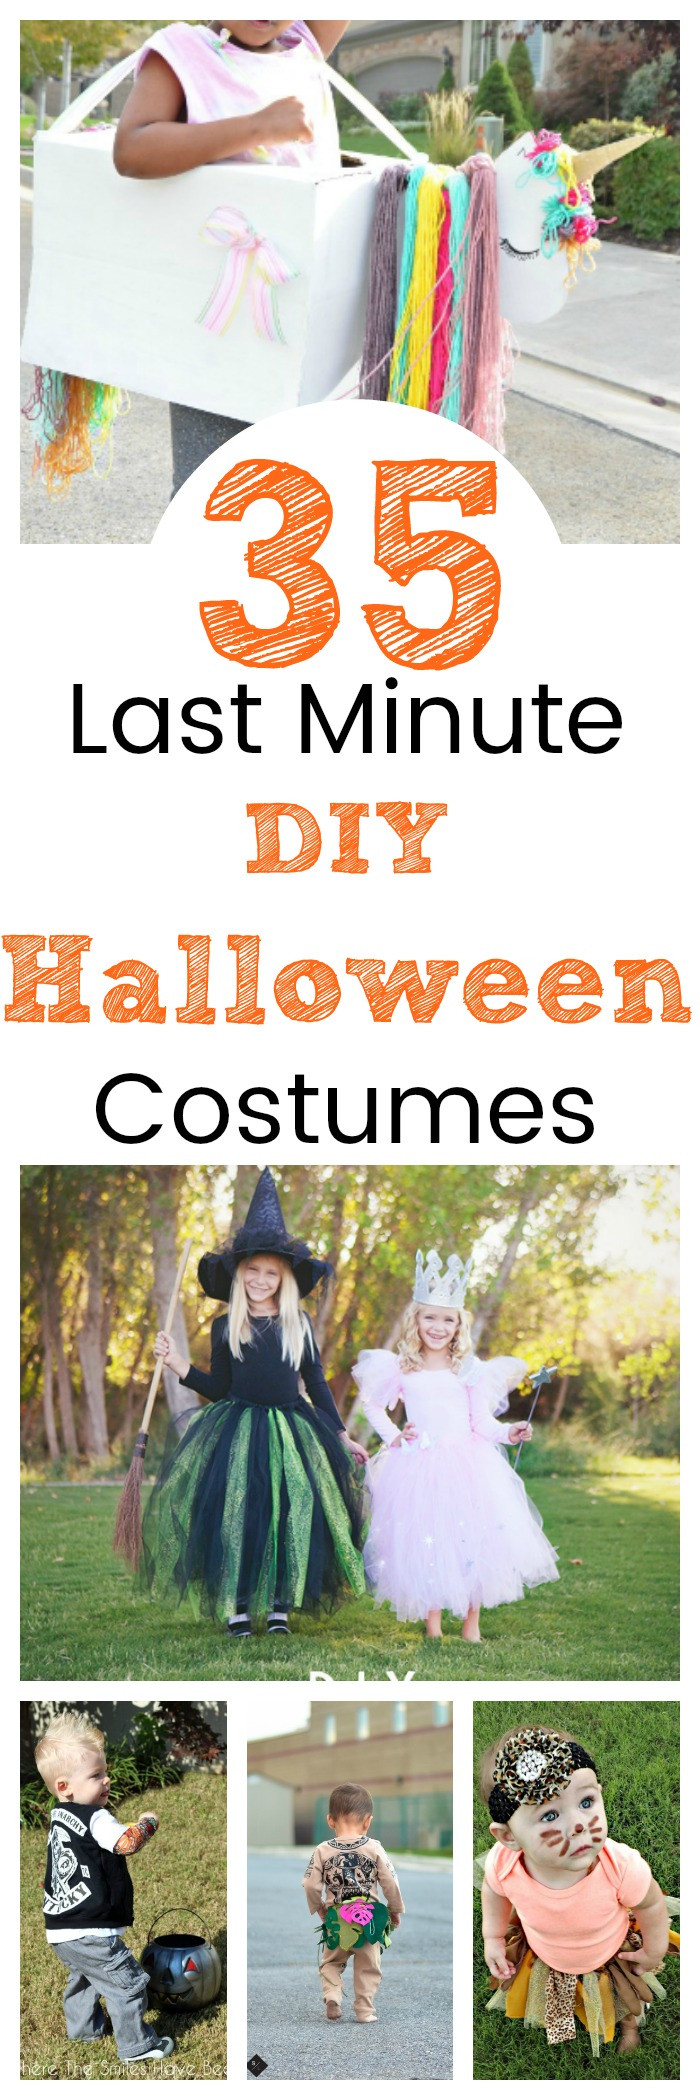 Best ideas about Last Minute DIY Halloween Costumes
. Save or Pin 35 Last Minute DIY Halloween Costumes Now.